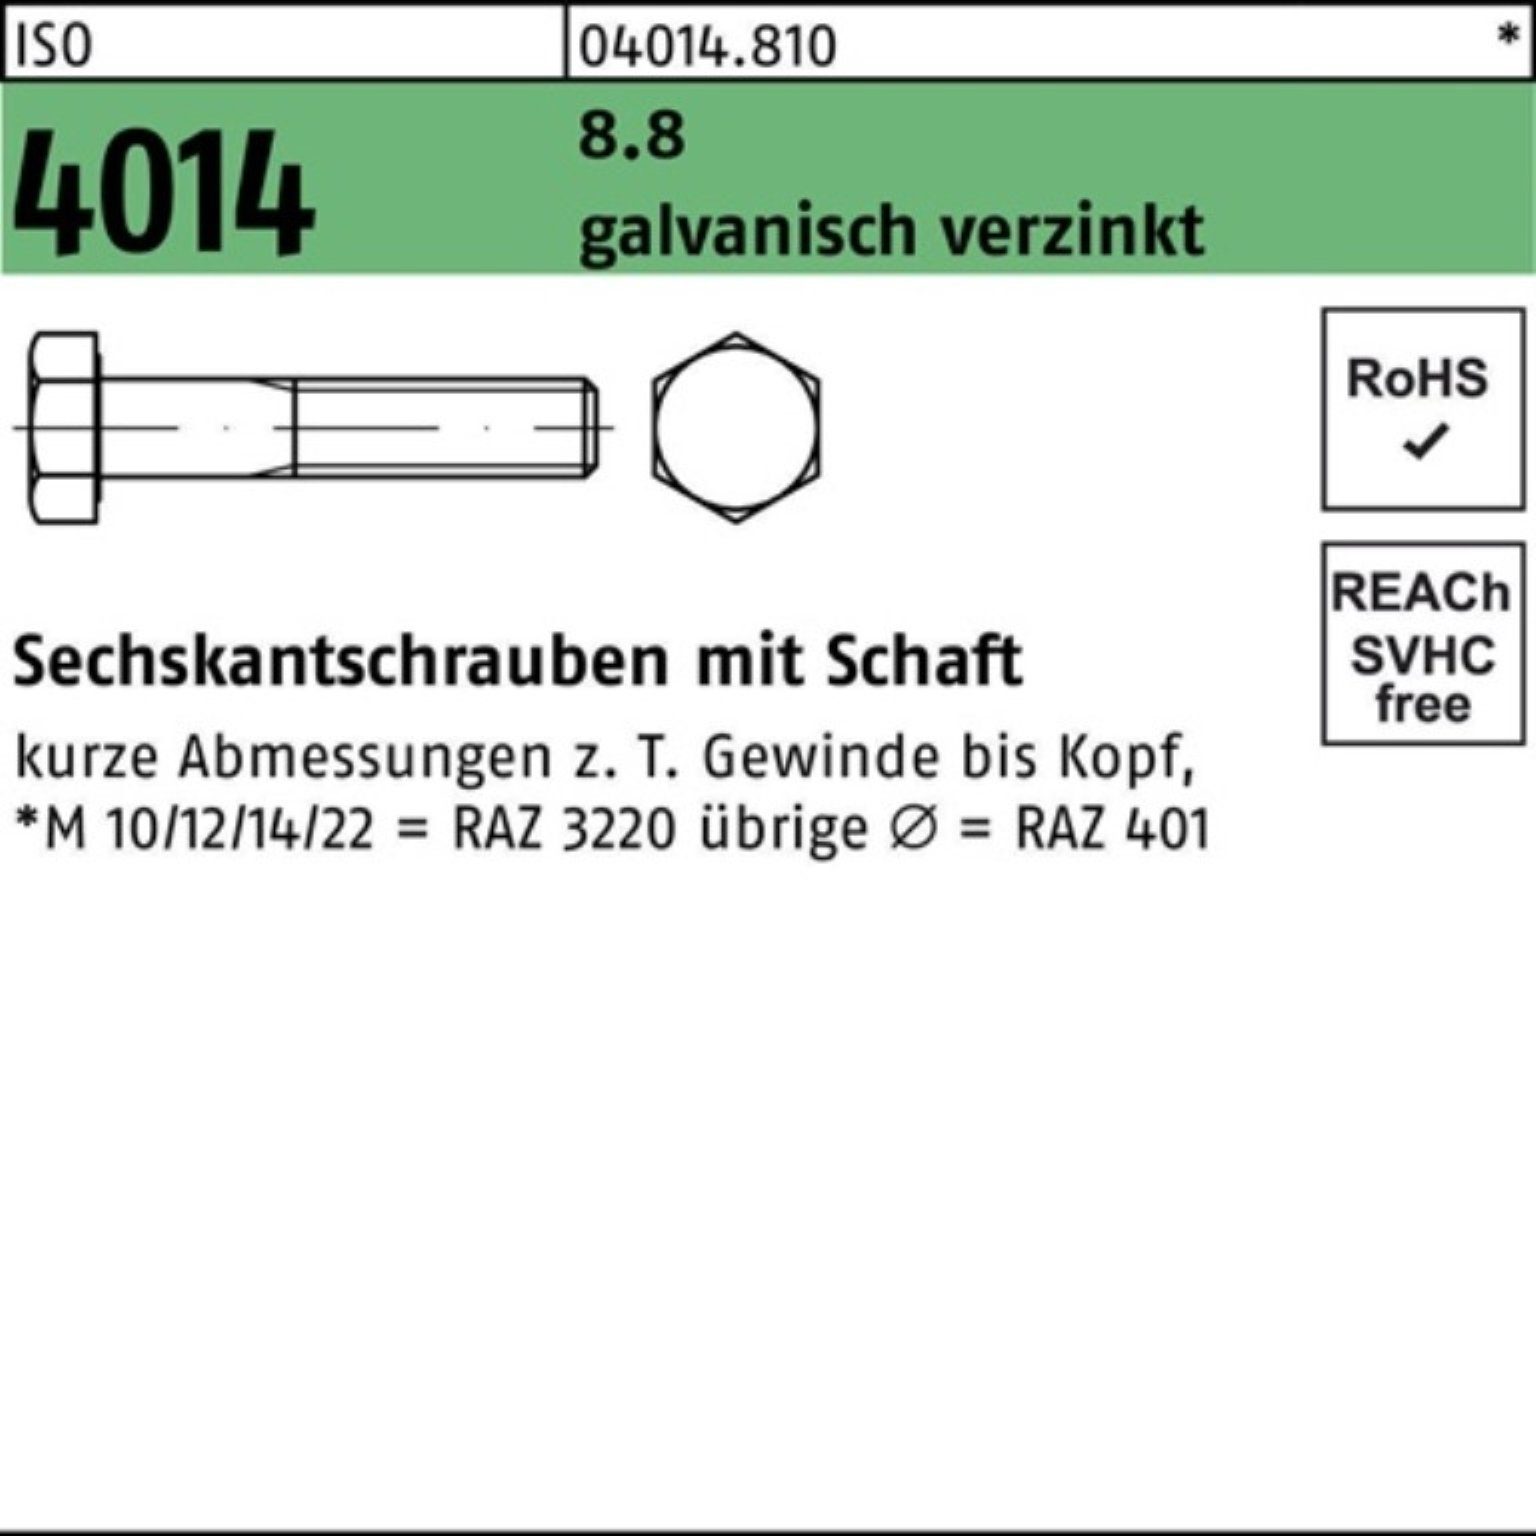 Bufab Sechskantschraube 100er Pack Sechskantschraube ISO 4014 Schaft M24x 380 8.8 galv.verz. 1 | Schrauben